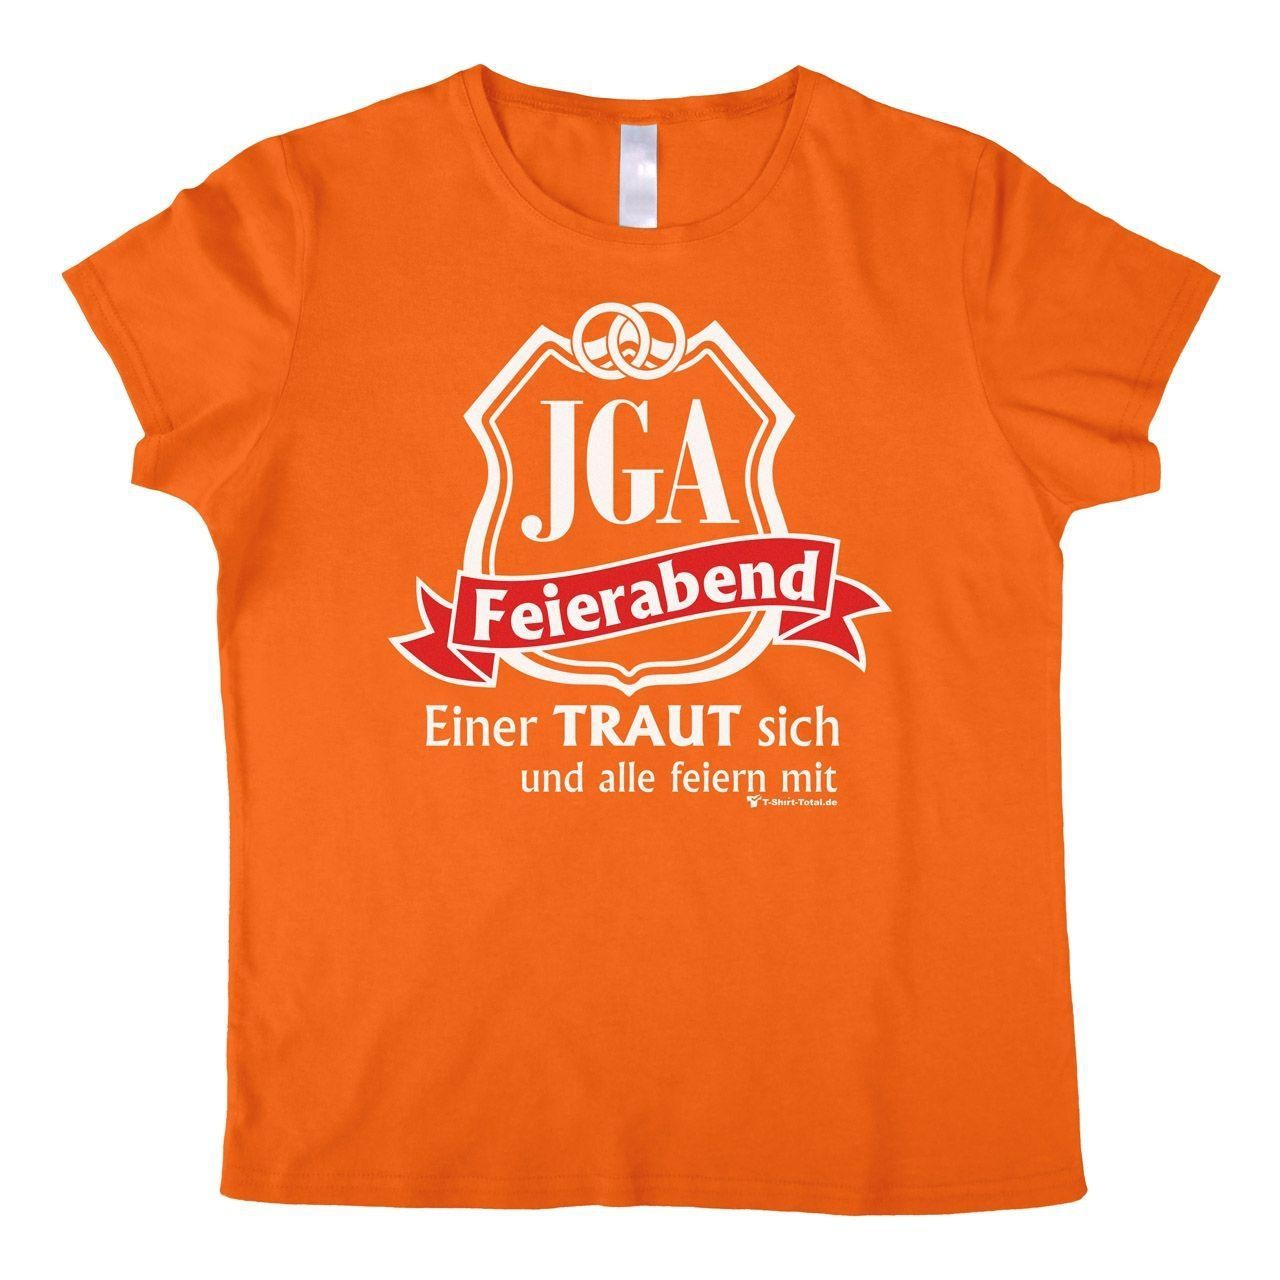 JGA Feierabend Woman T-Shirt orange Small